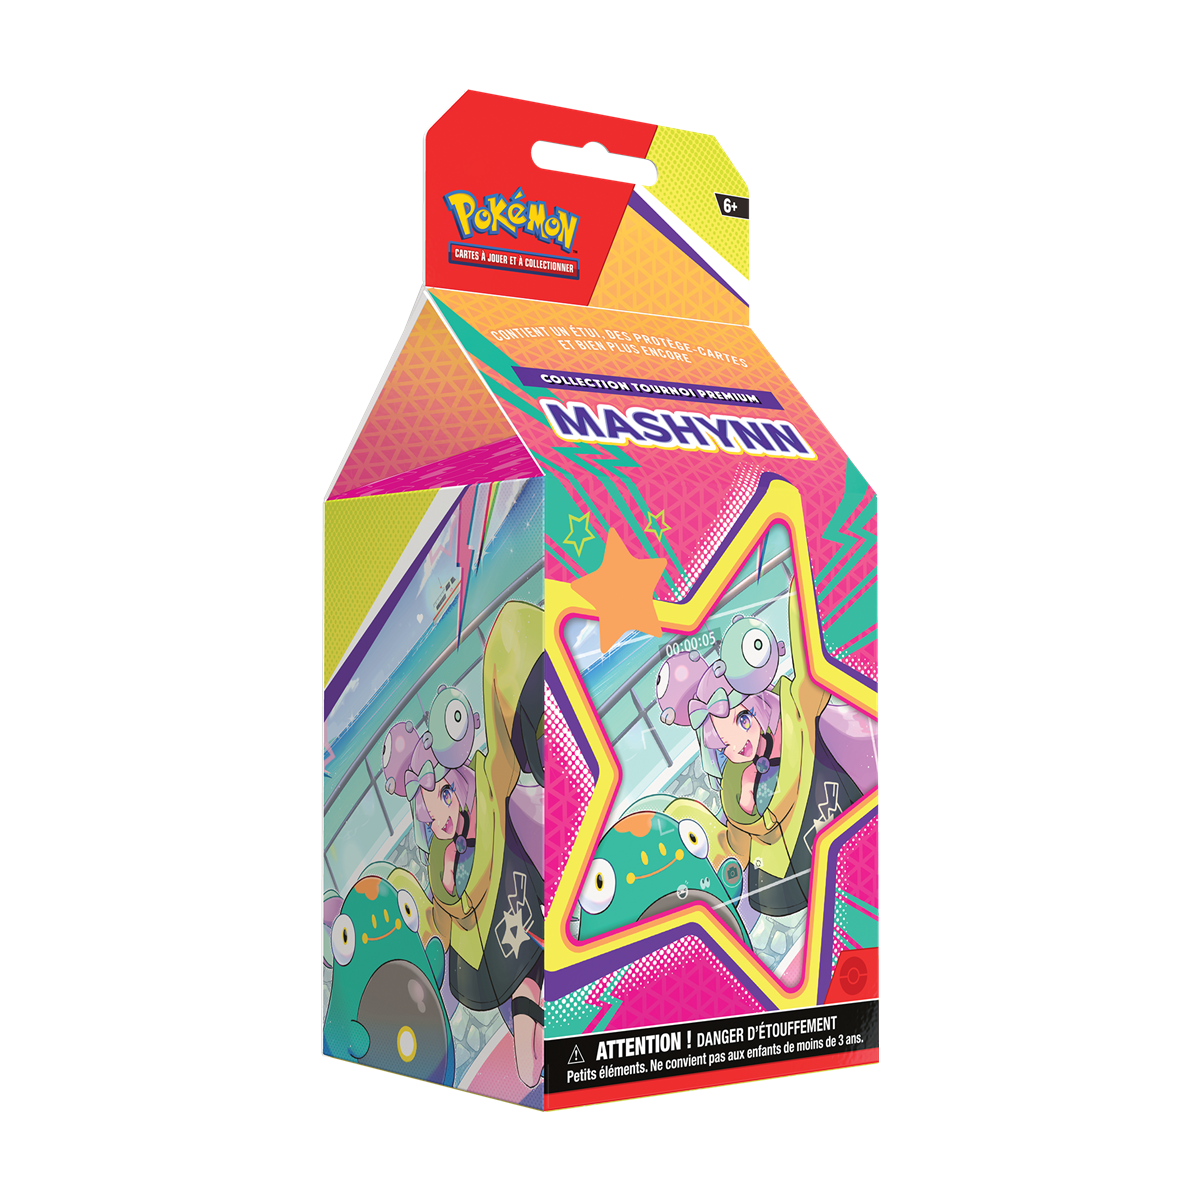 Pokémon – Community Box – Mashynn Premium Tournament Collection – FR